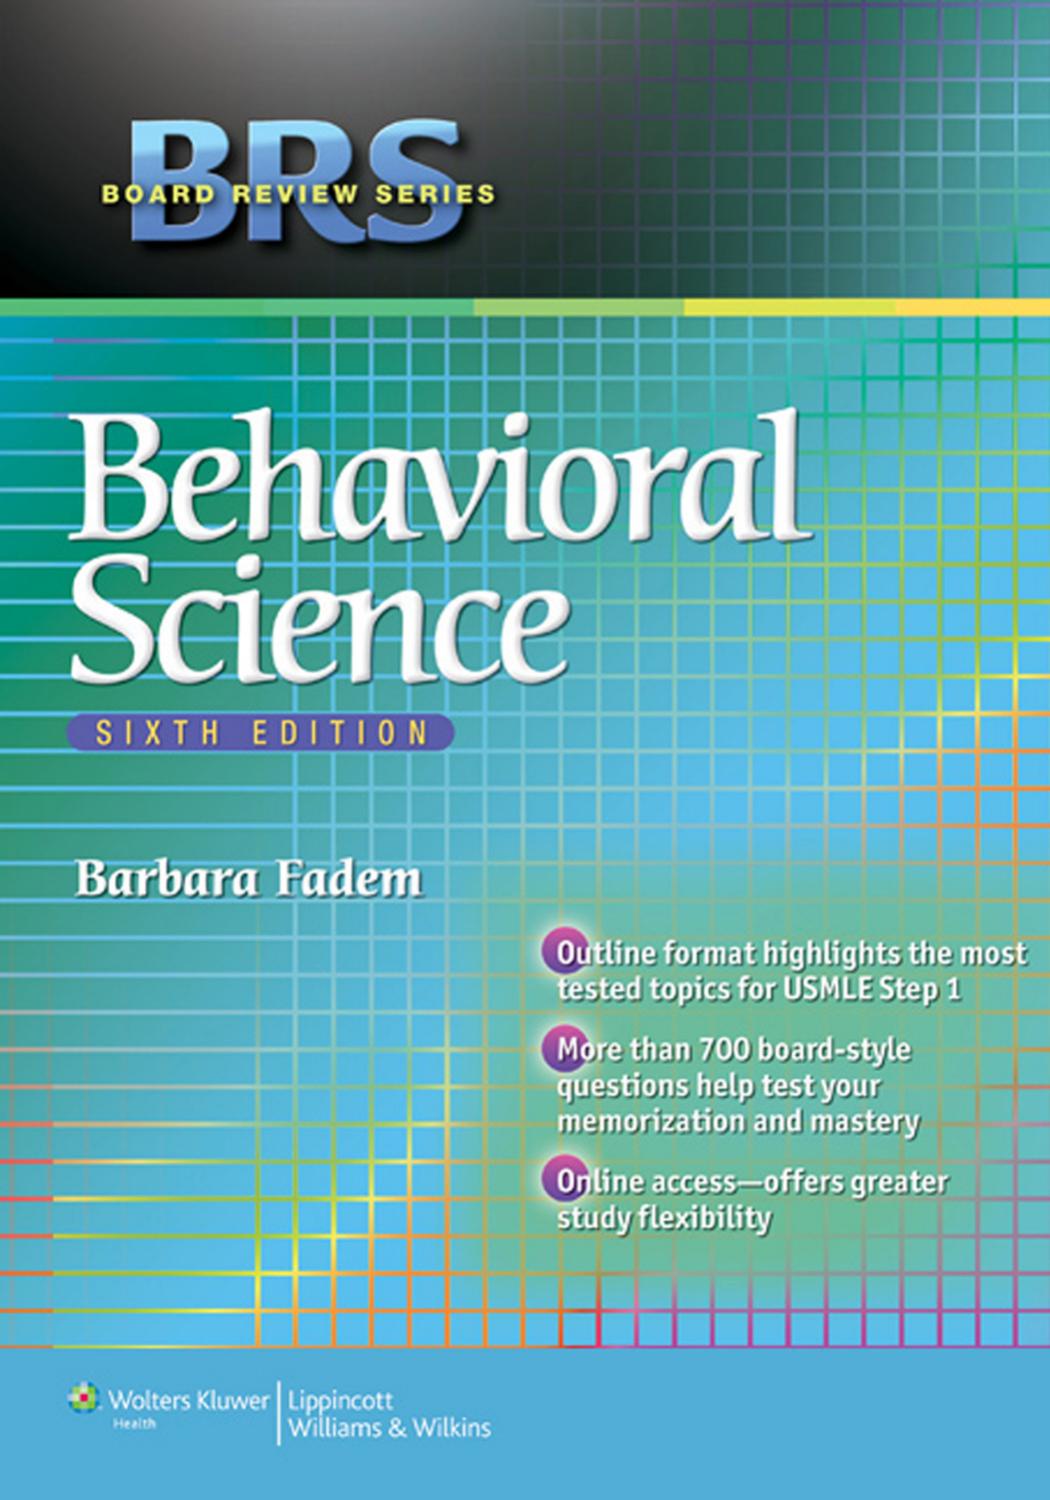 Behavioral Science: SIXTH EDITION